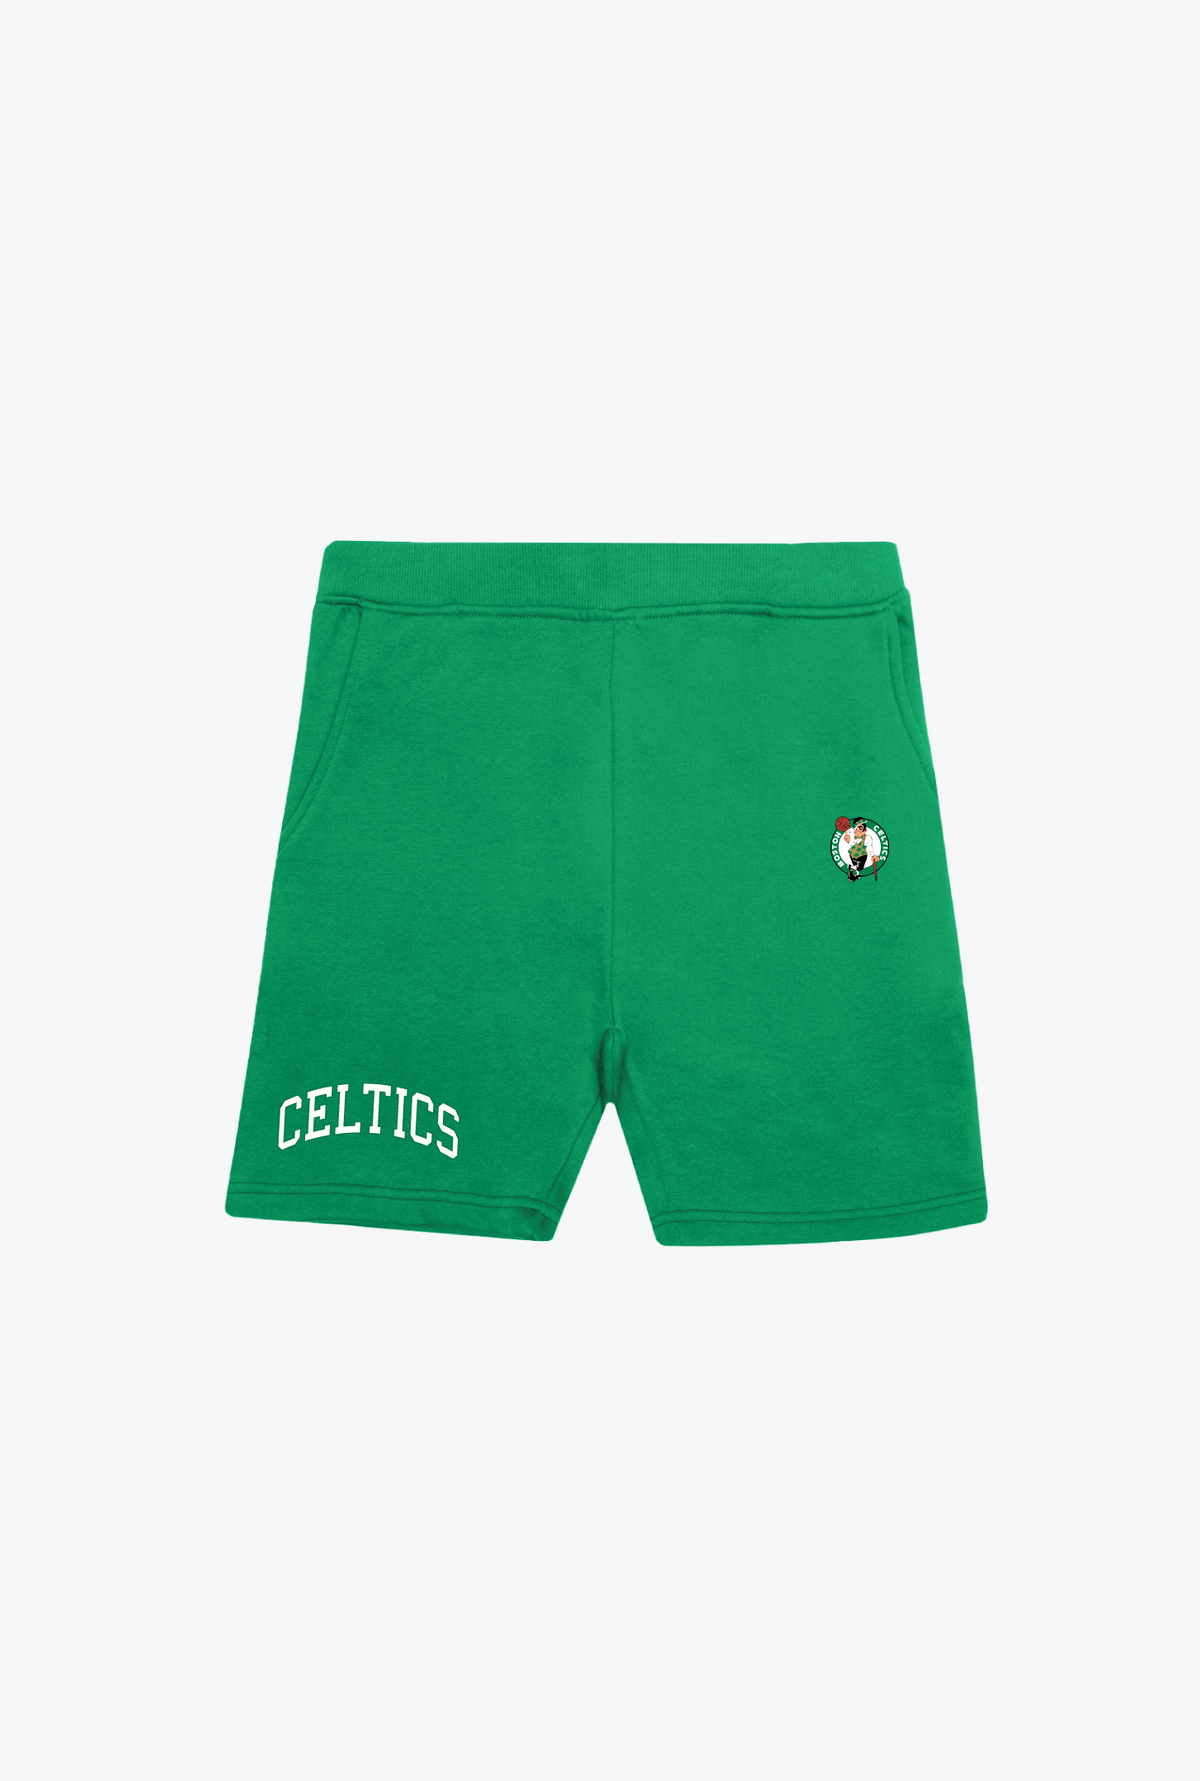 Boston Celtics Playoffs Fleece Shorts - Kelly Green